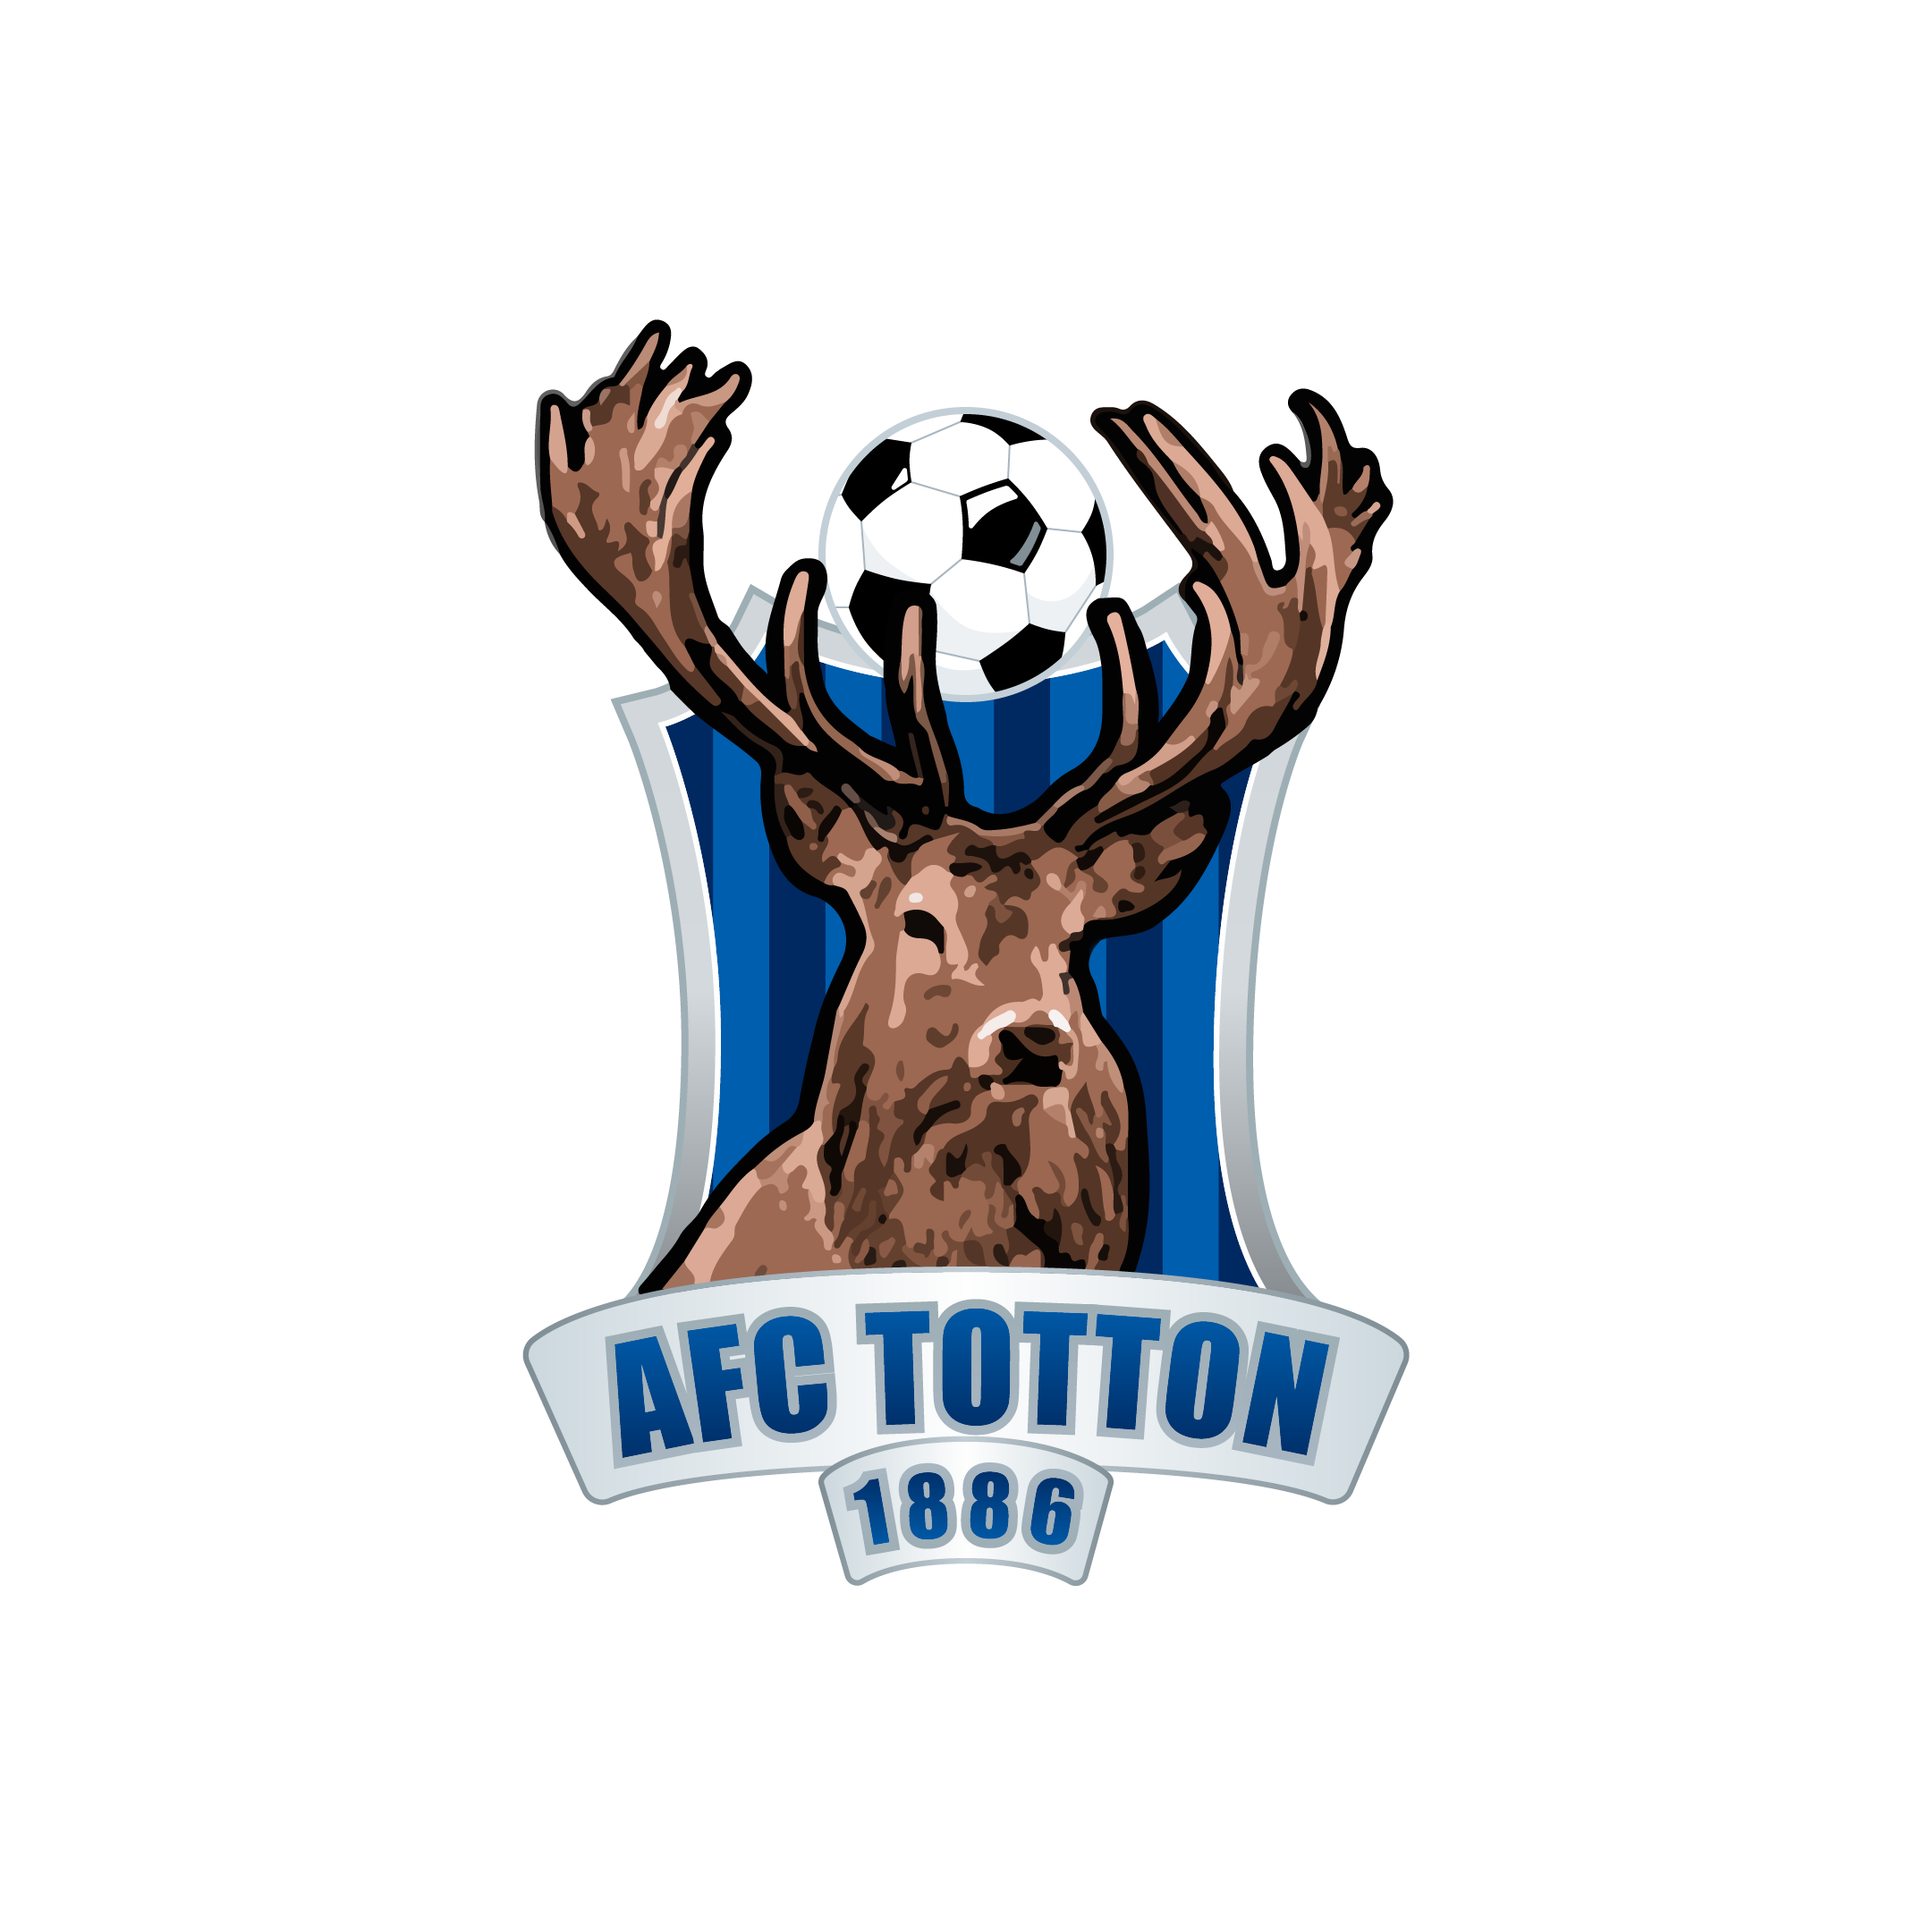 Totton AFC